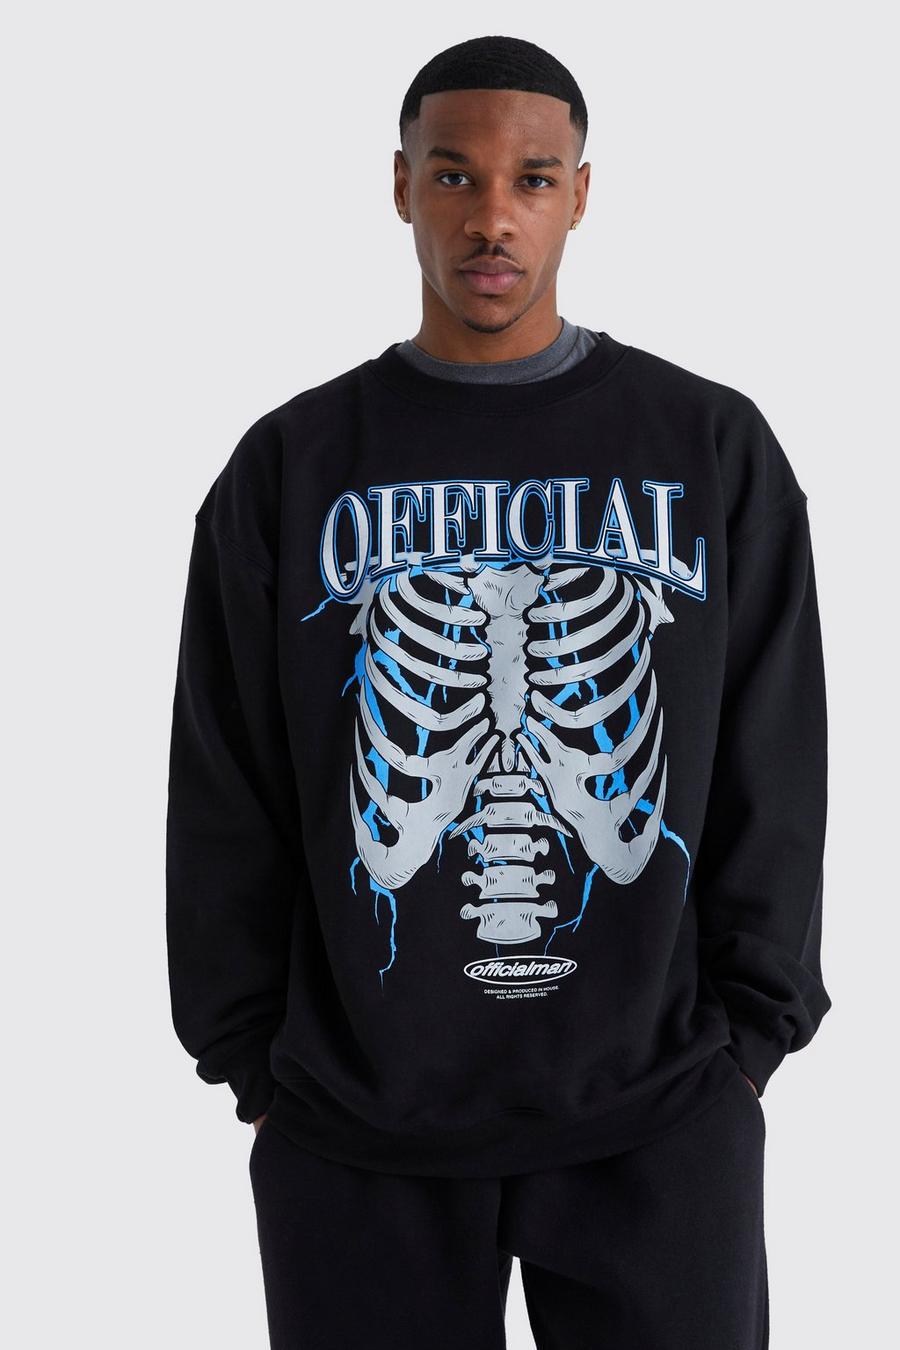 Black Oversized Skeleton Graphic Sweatshirt